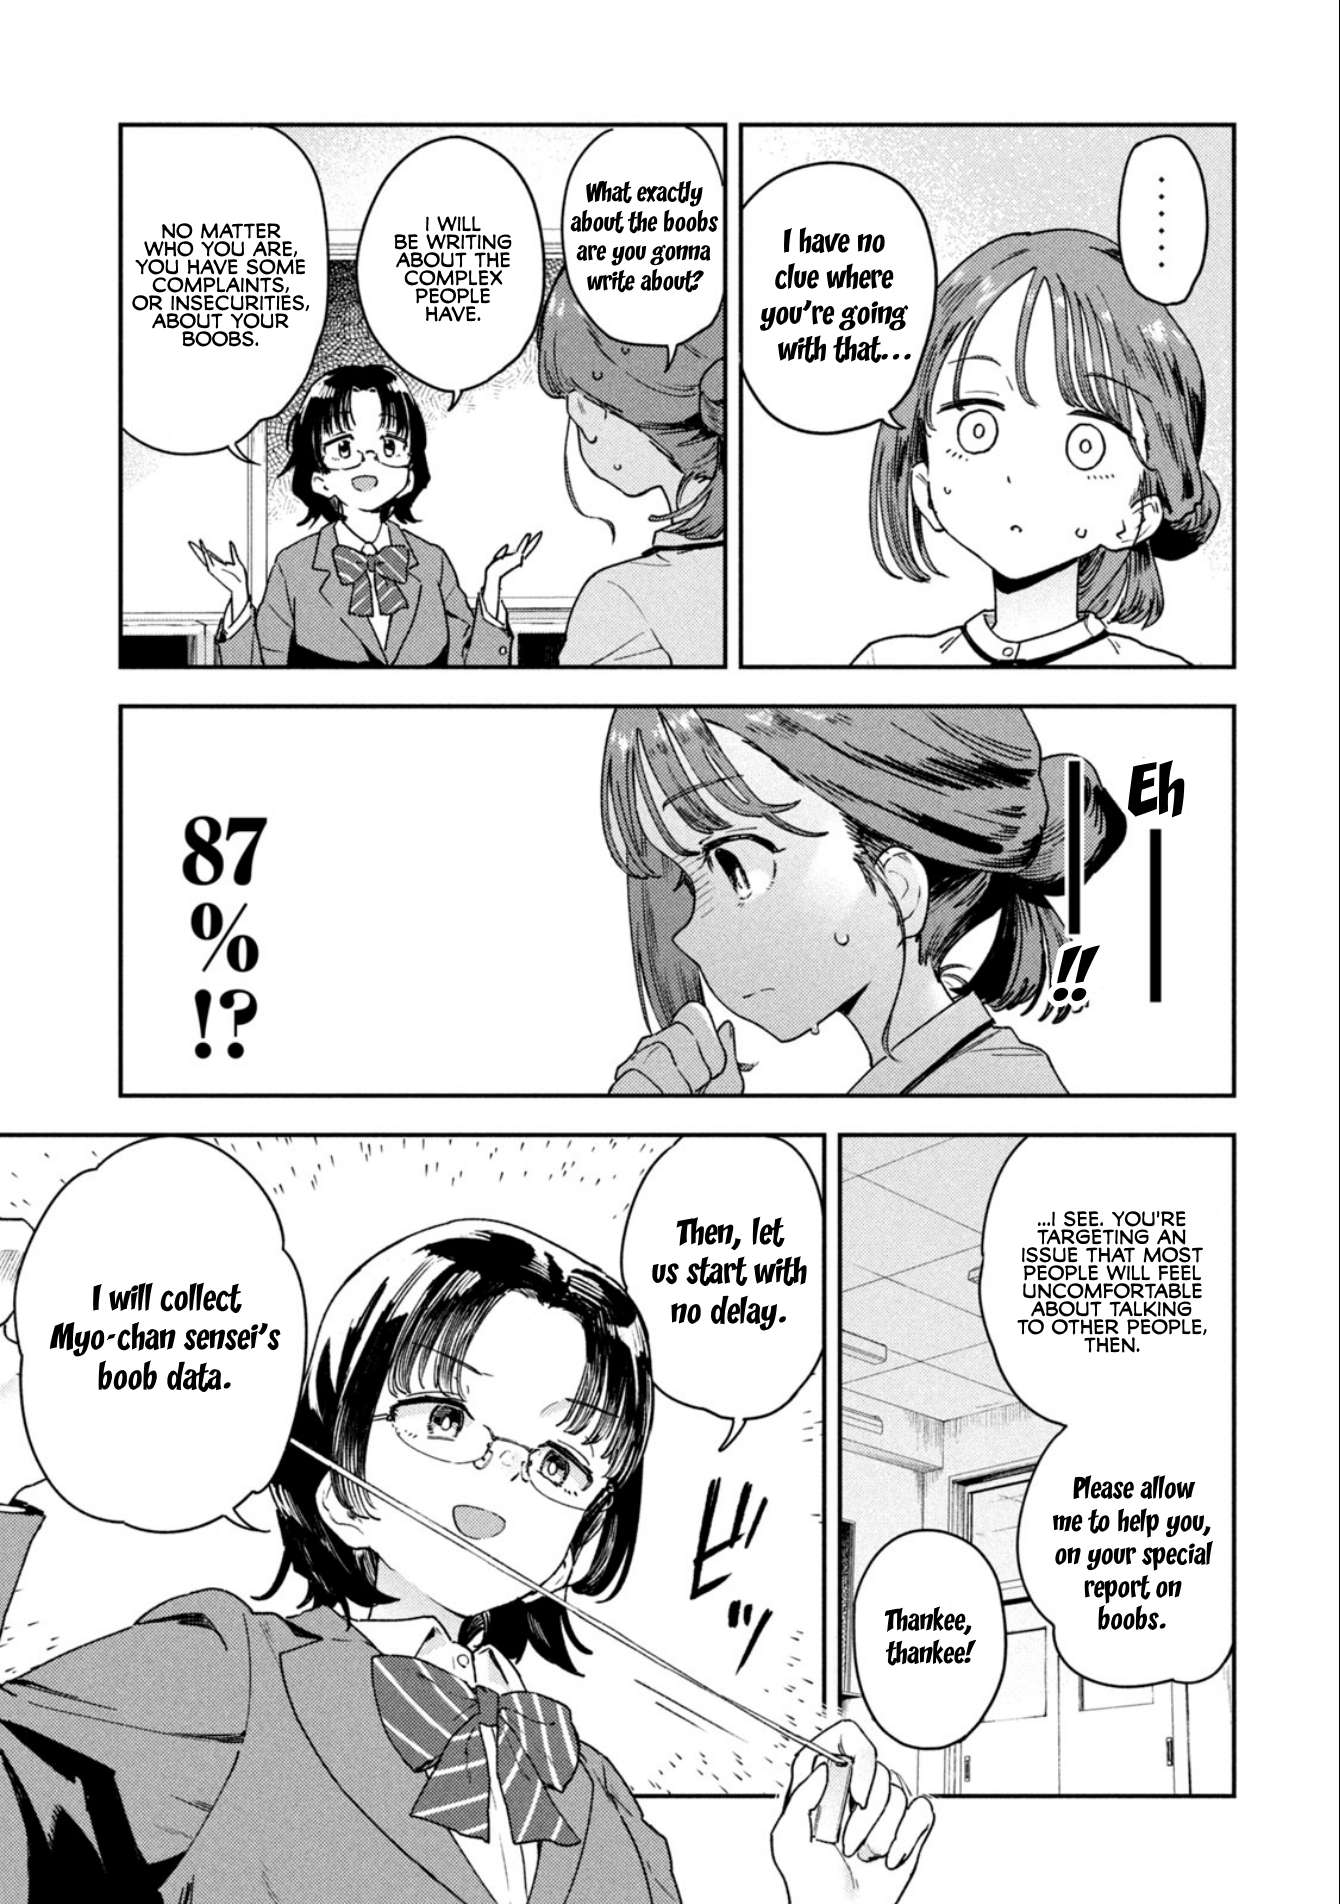 Miyo-Chan Sensei Said So - chapter 2 - #3